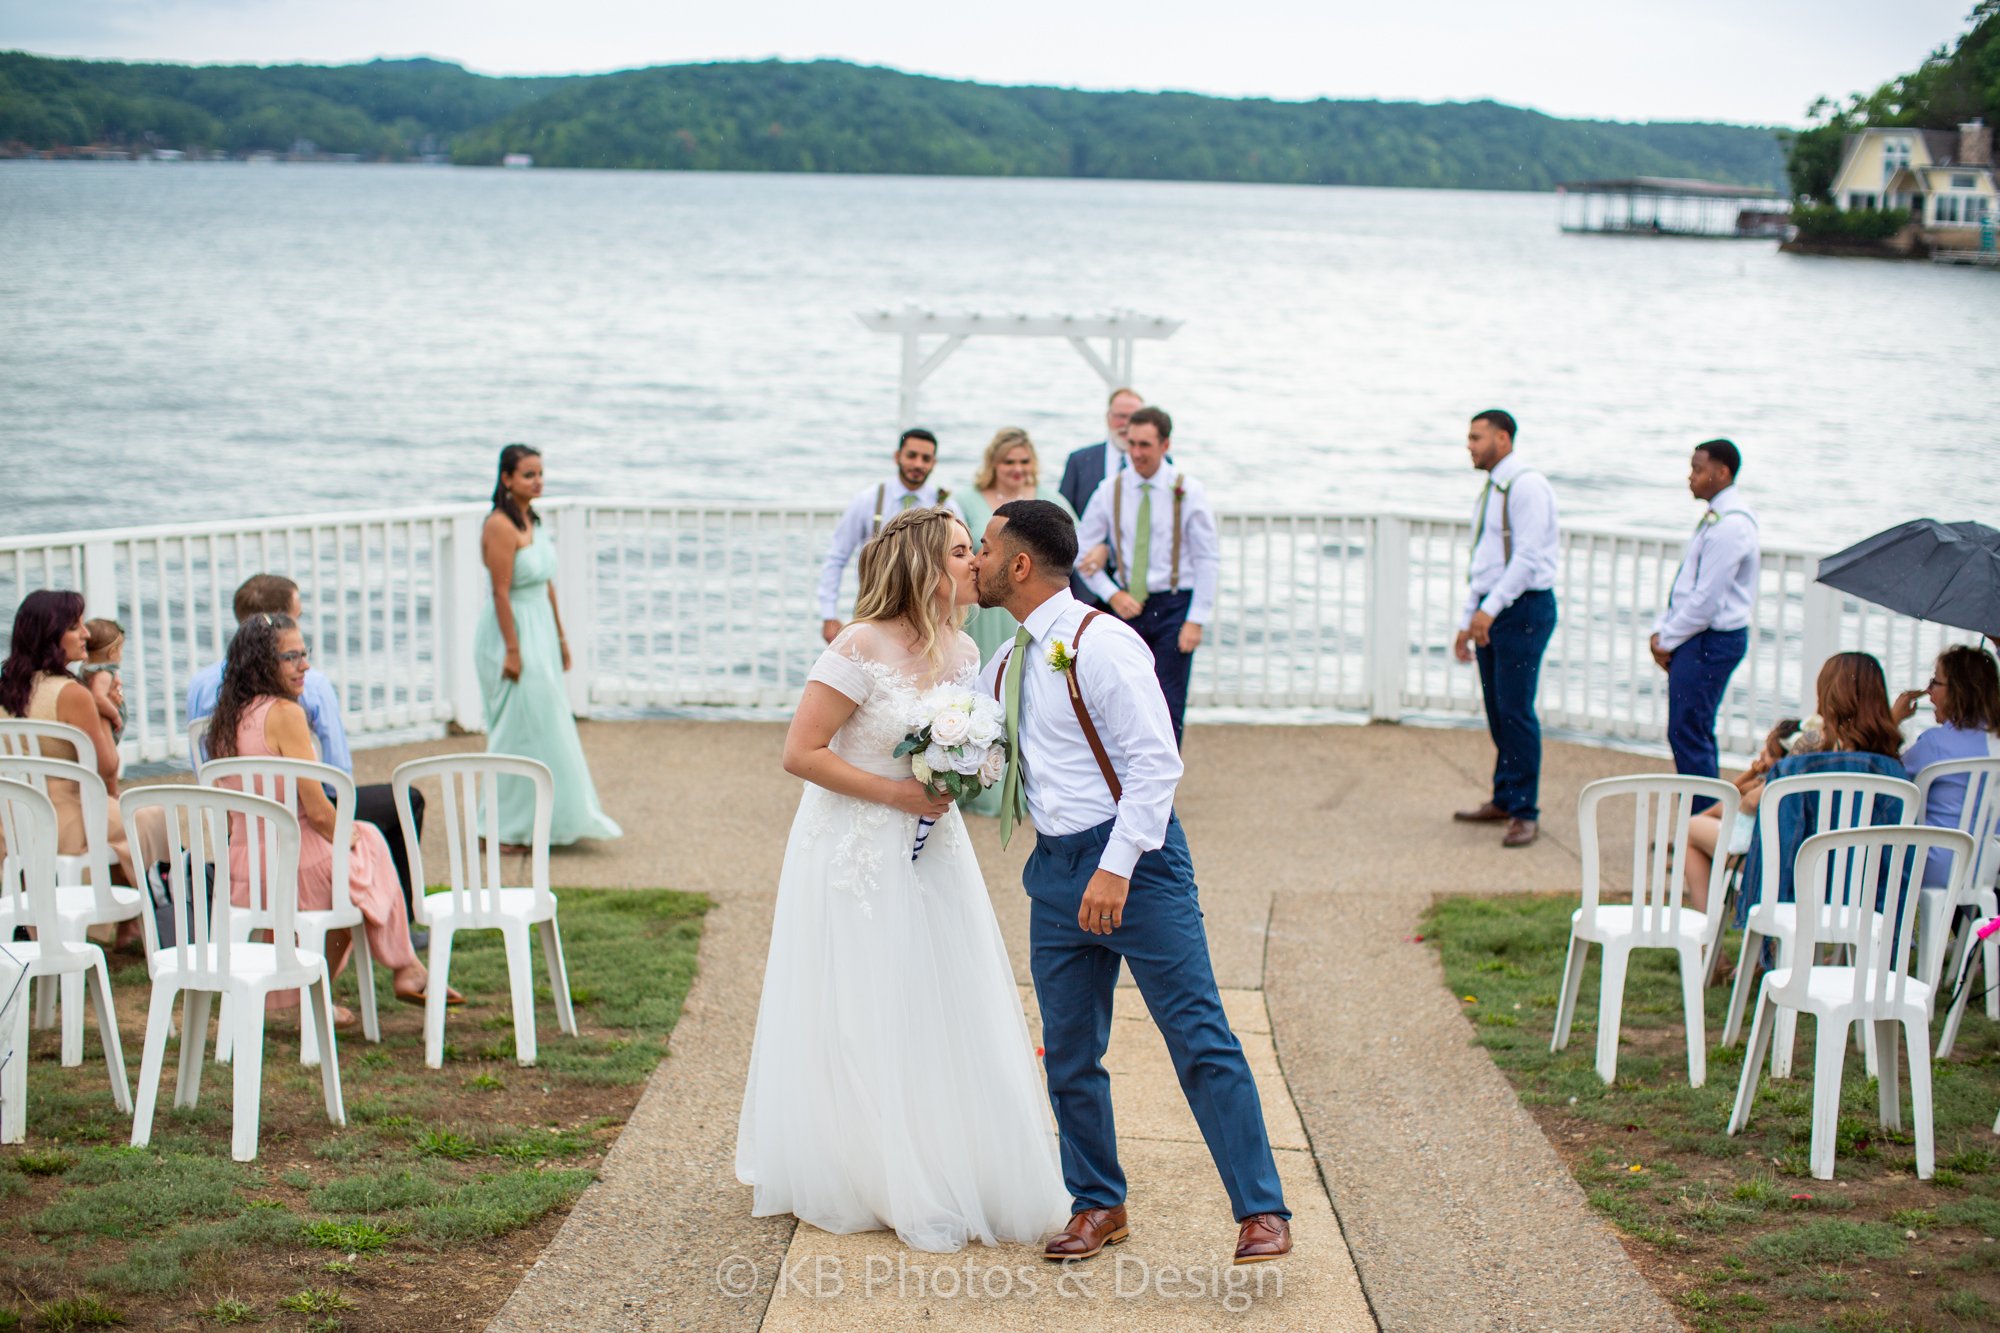 Abbi-Daniel-Wedding-Lake-of-the-Ozarks-Margaritaville-Missouri-Jefferson-City-wedding-photos-KB-Photos-and-Design-560.jpg